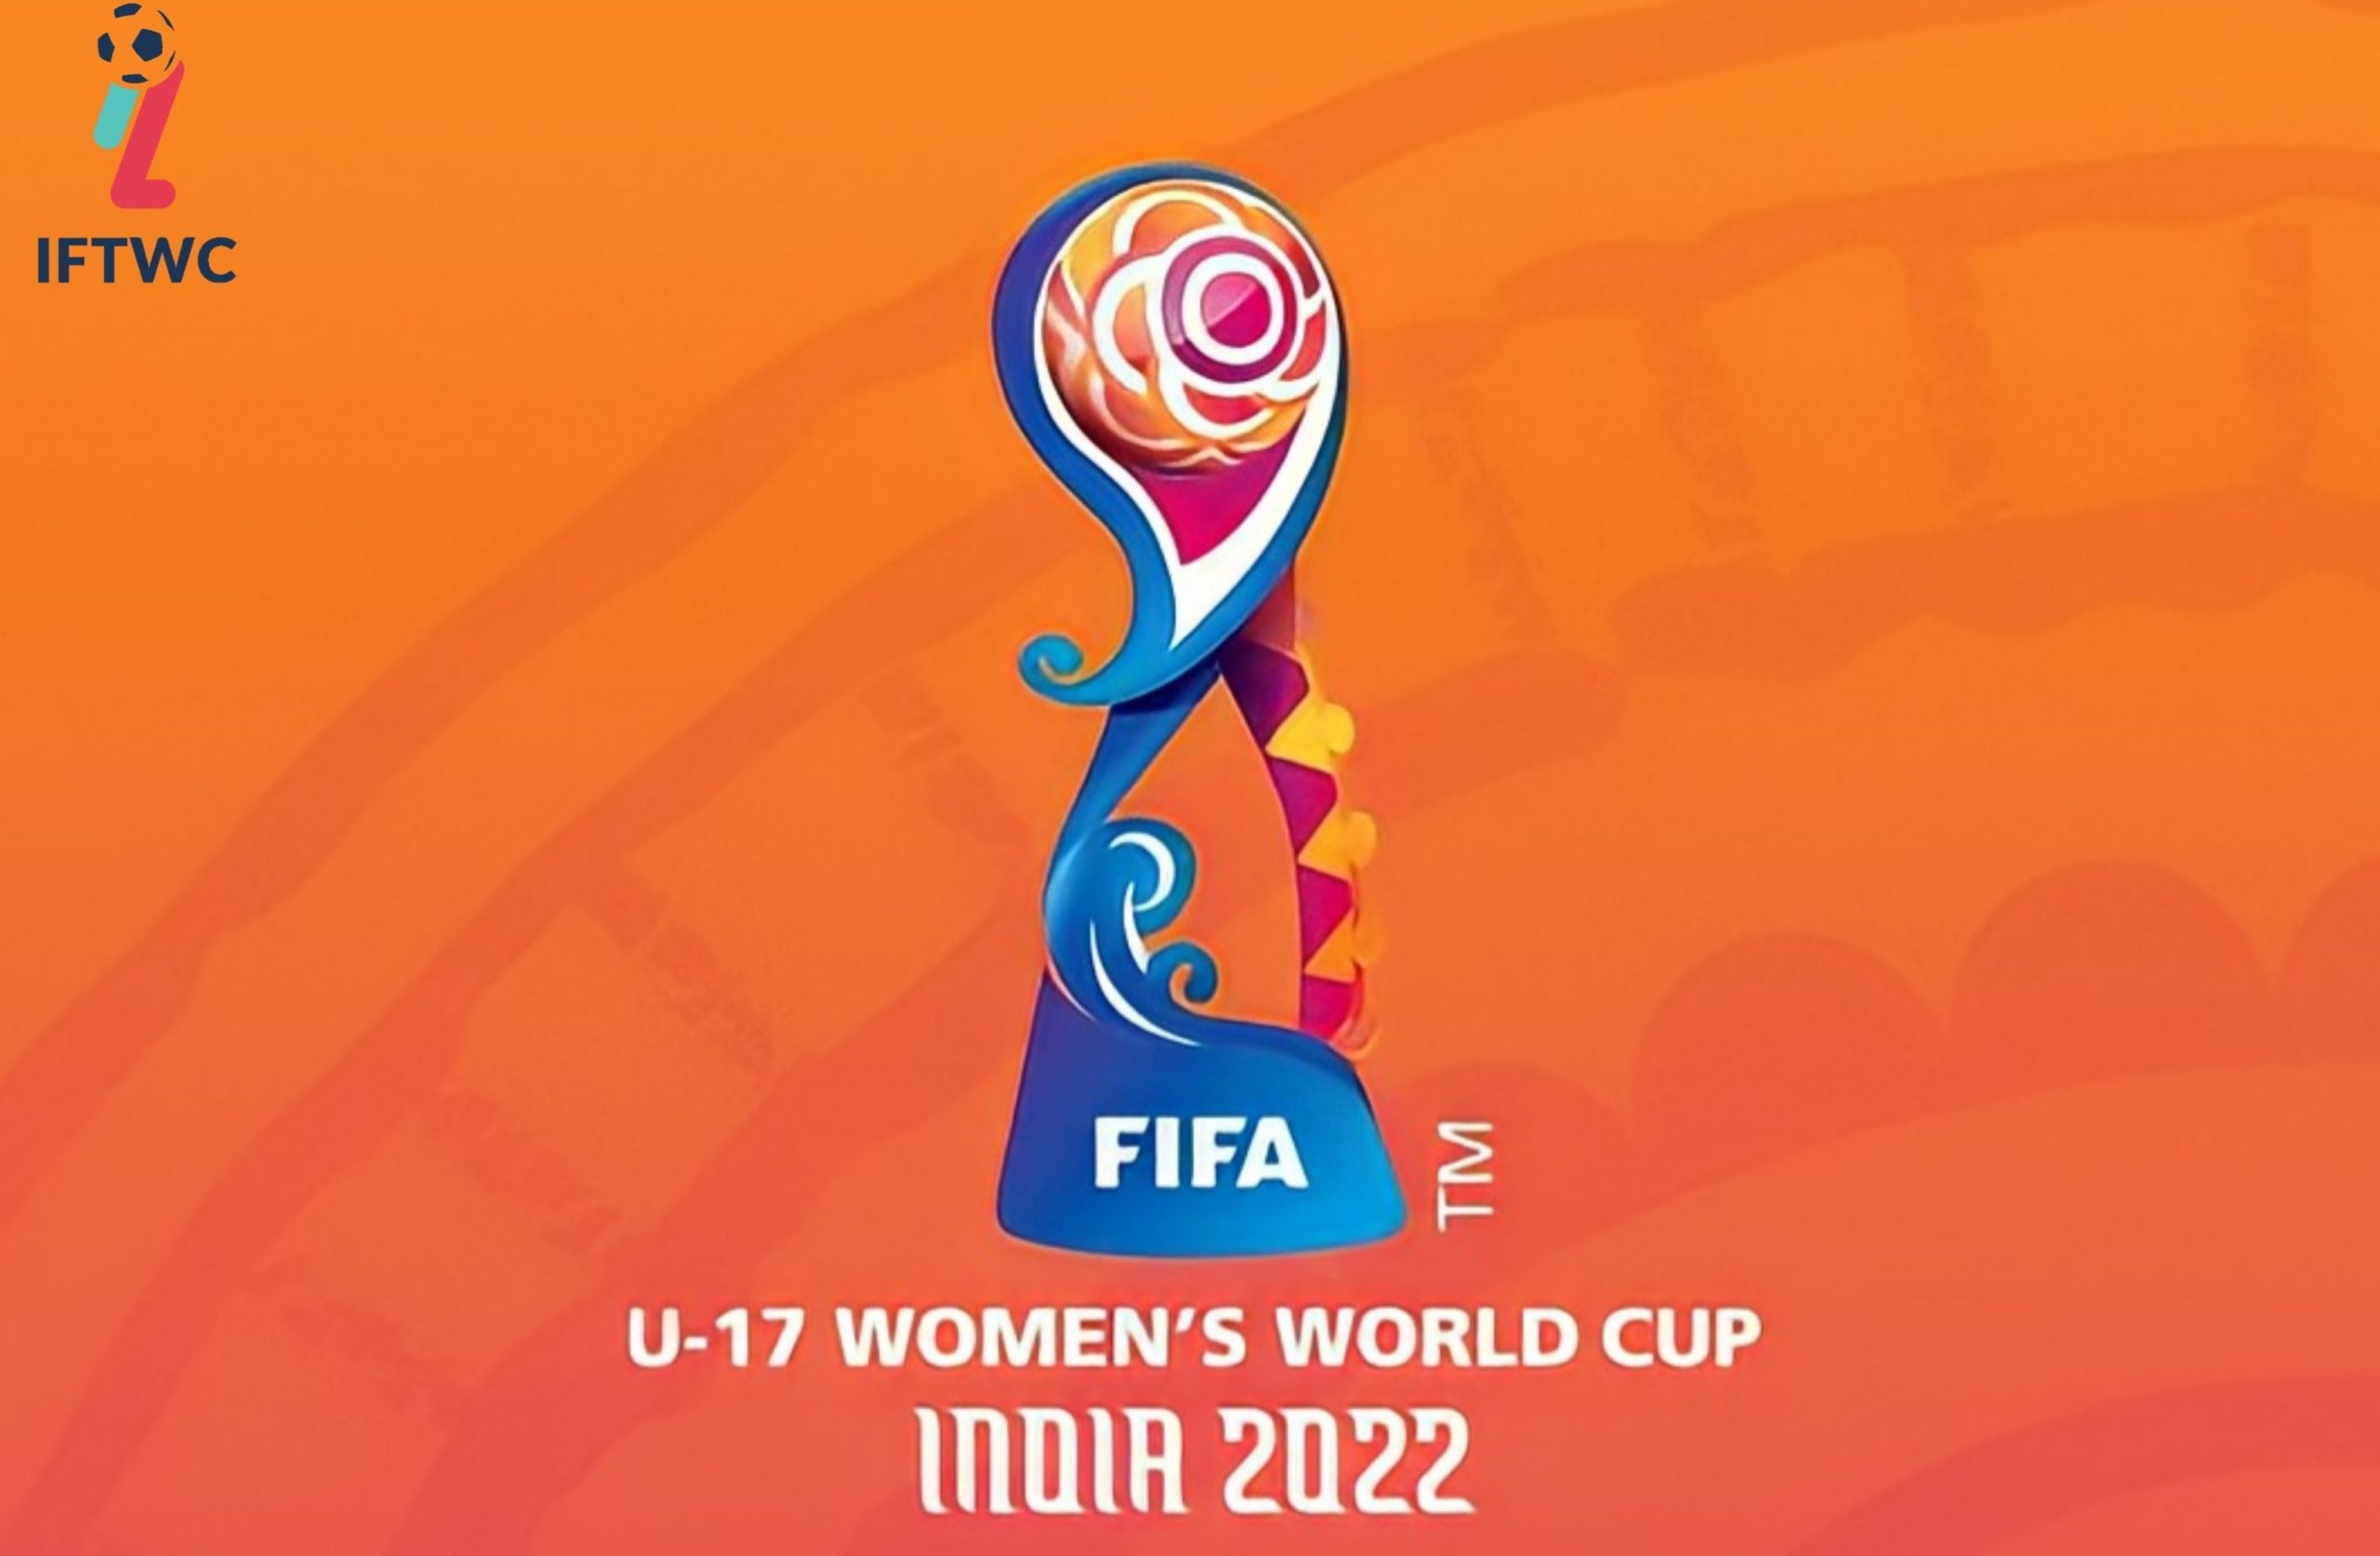 Bhubaneswar to host FIFA U-17 Women's World Cup